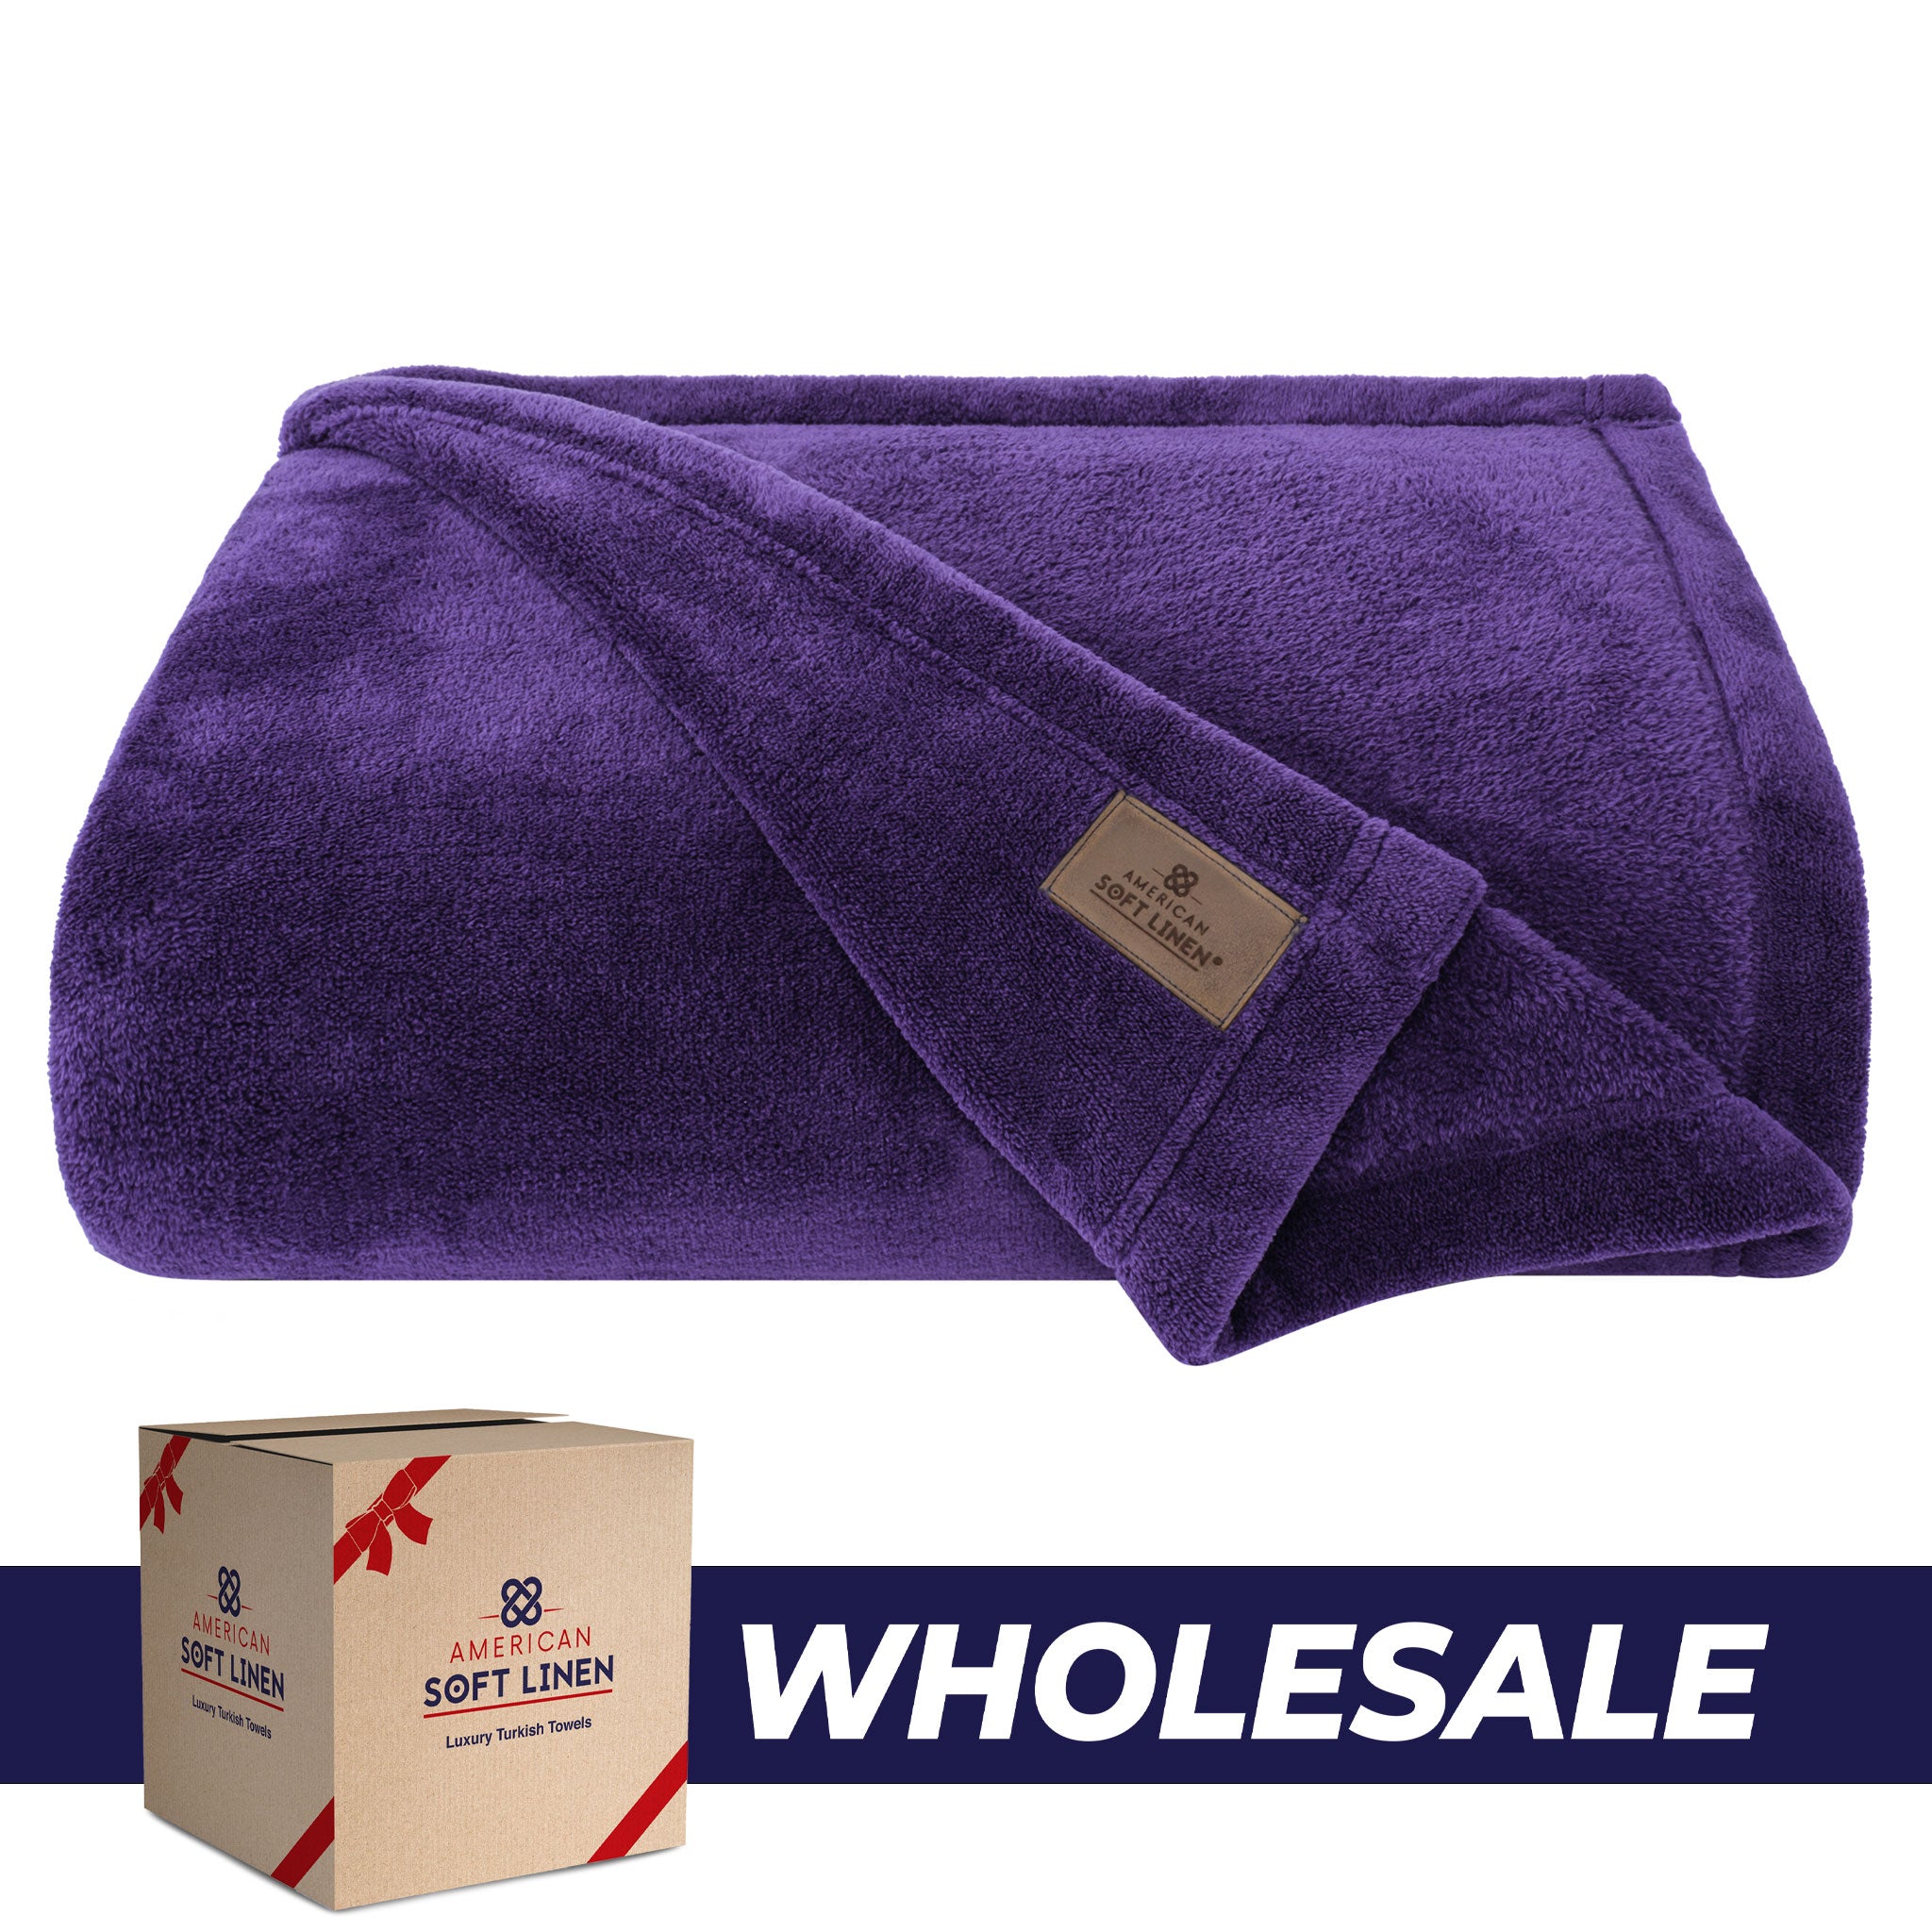 American Soft Linen - Bedding Fleece Blanket - Wholesale - 9 Set Case Pack - Queen Size 85x90 inches - Purple - 0